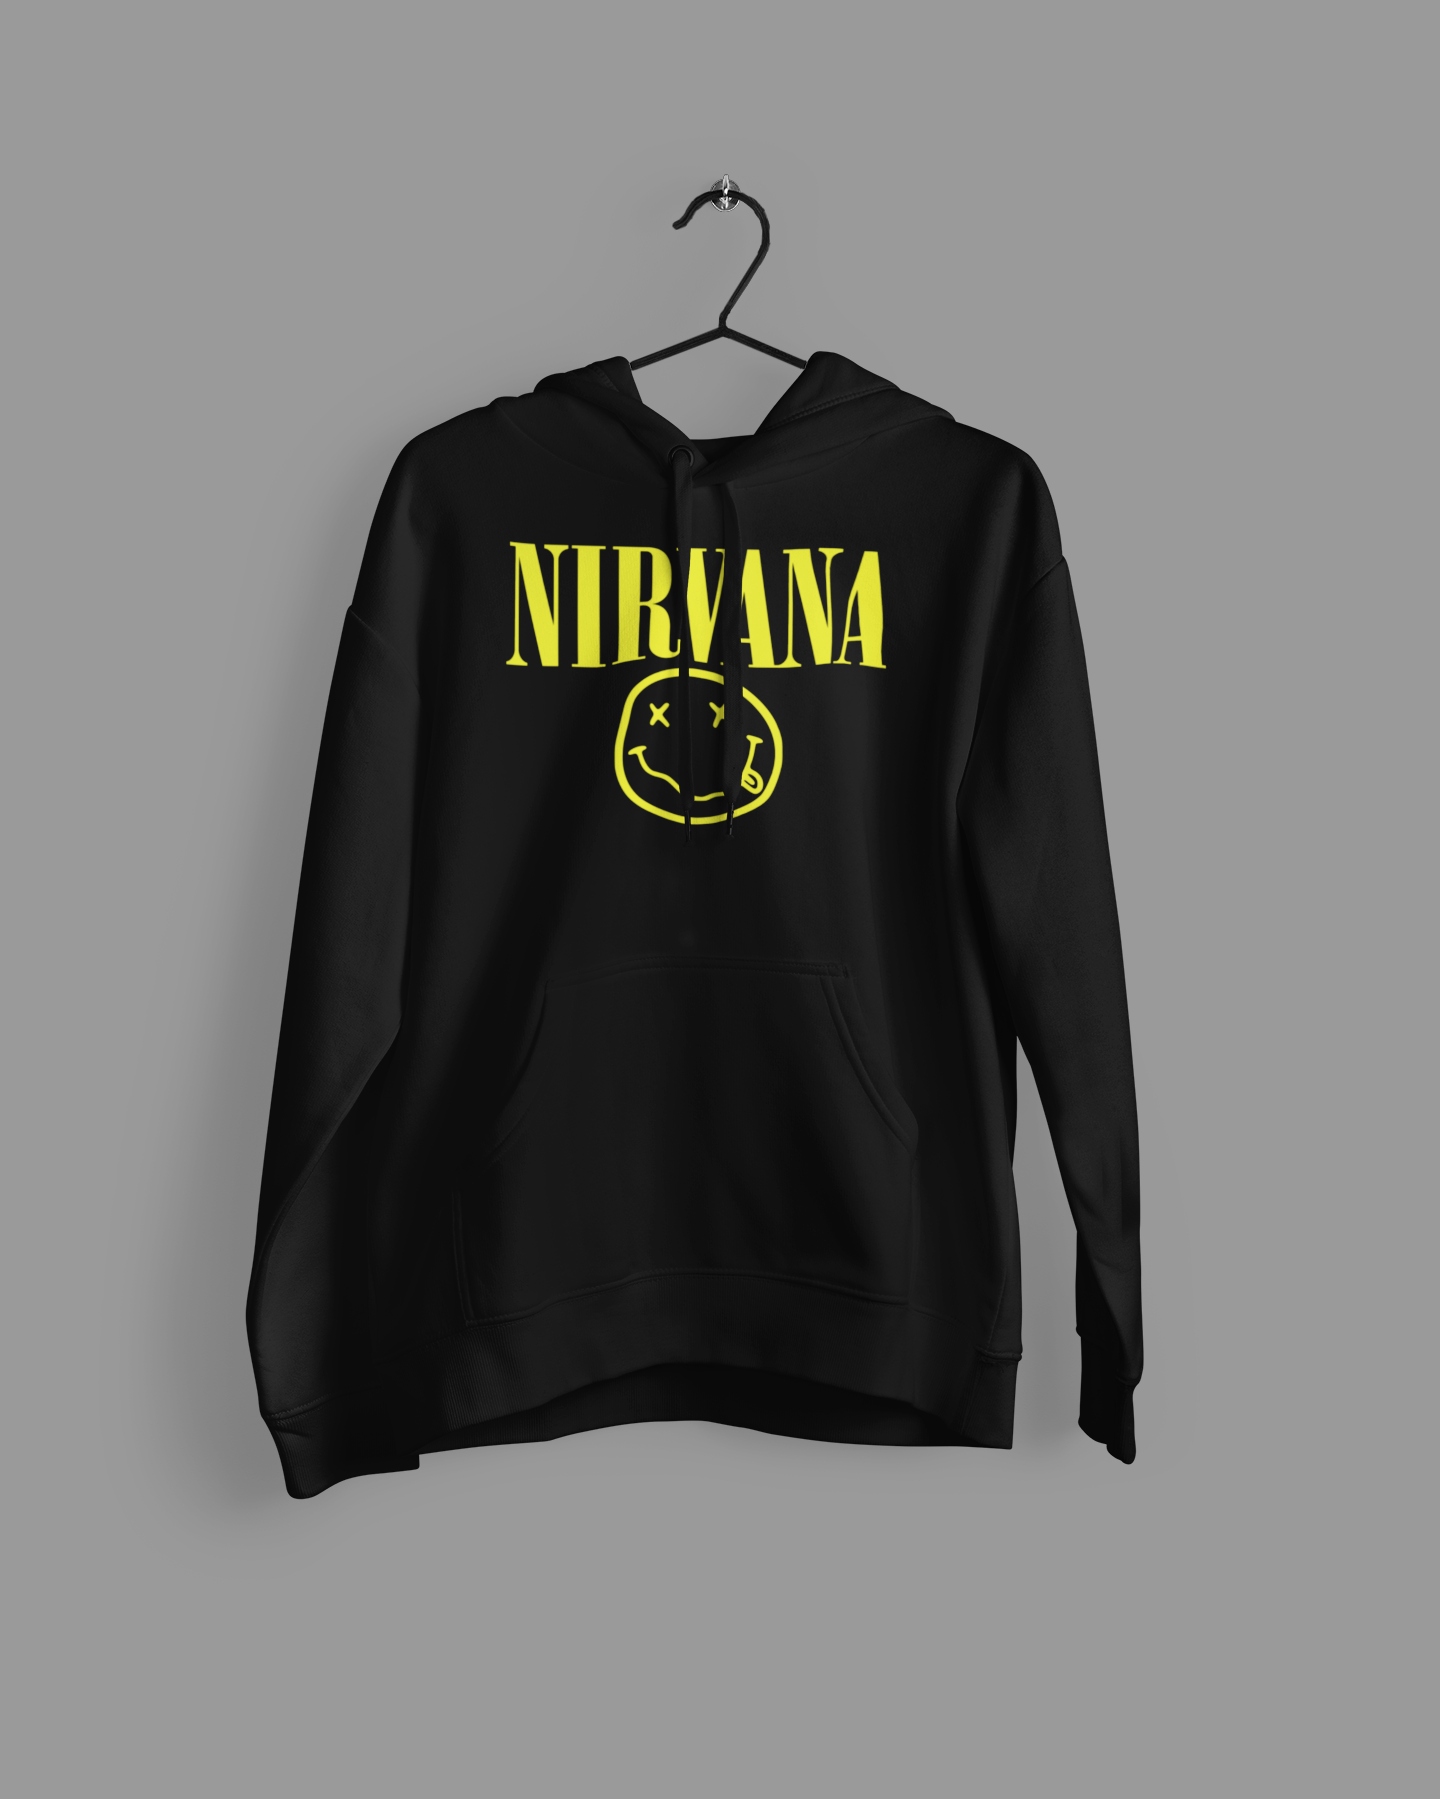 Moletom "Nirvana" Clássico - Música